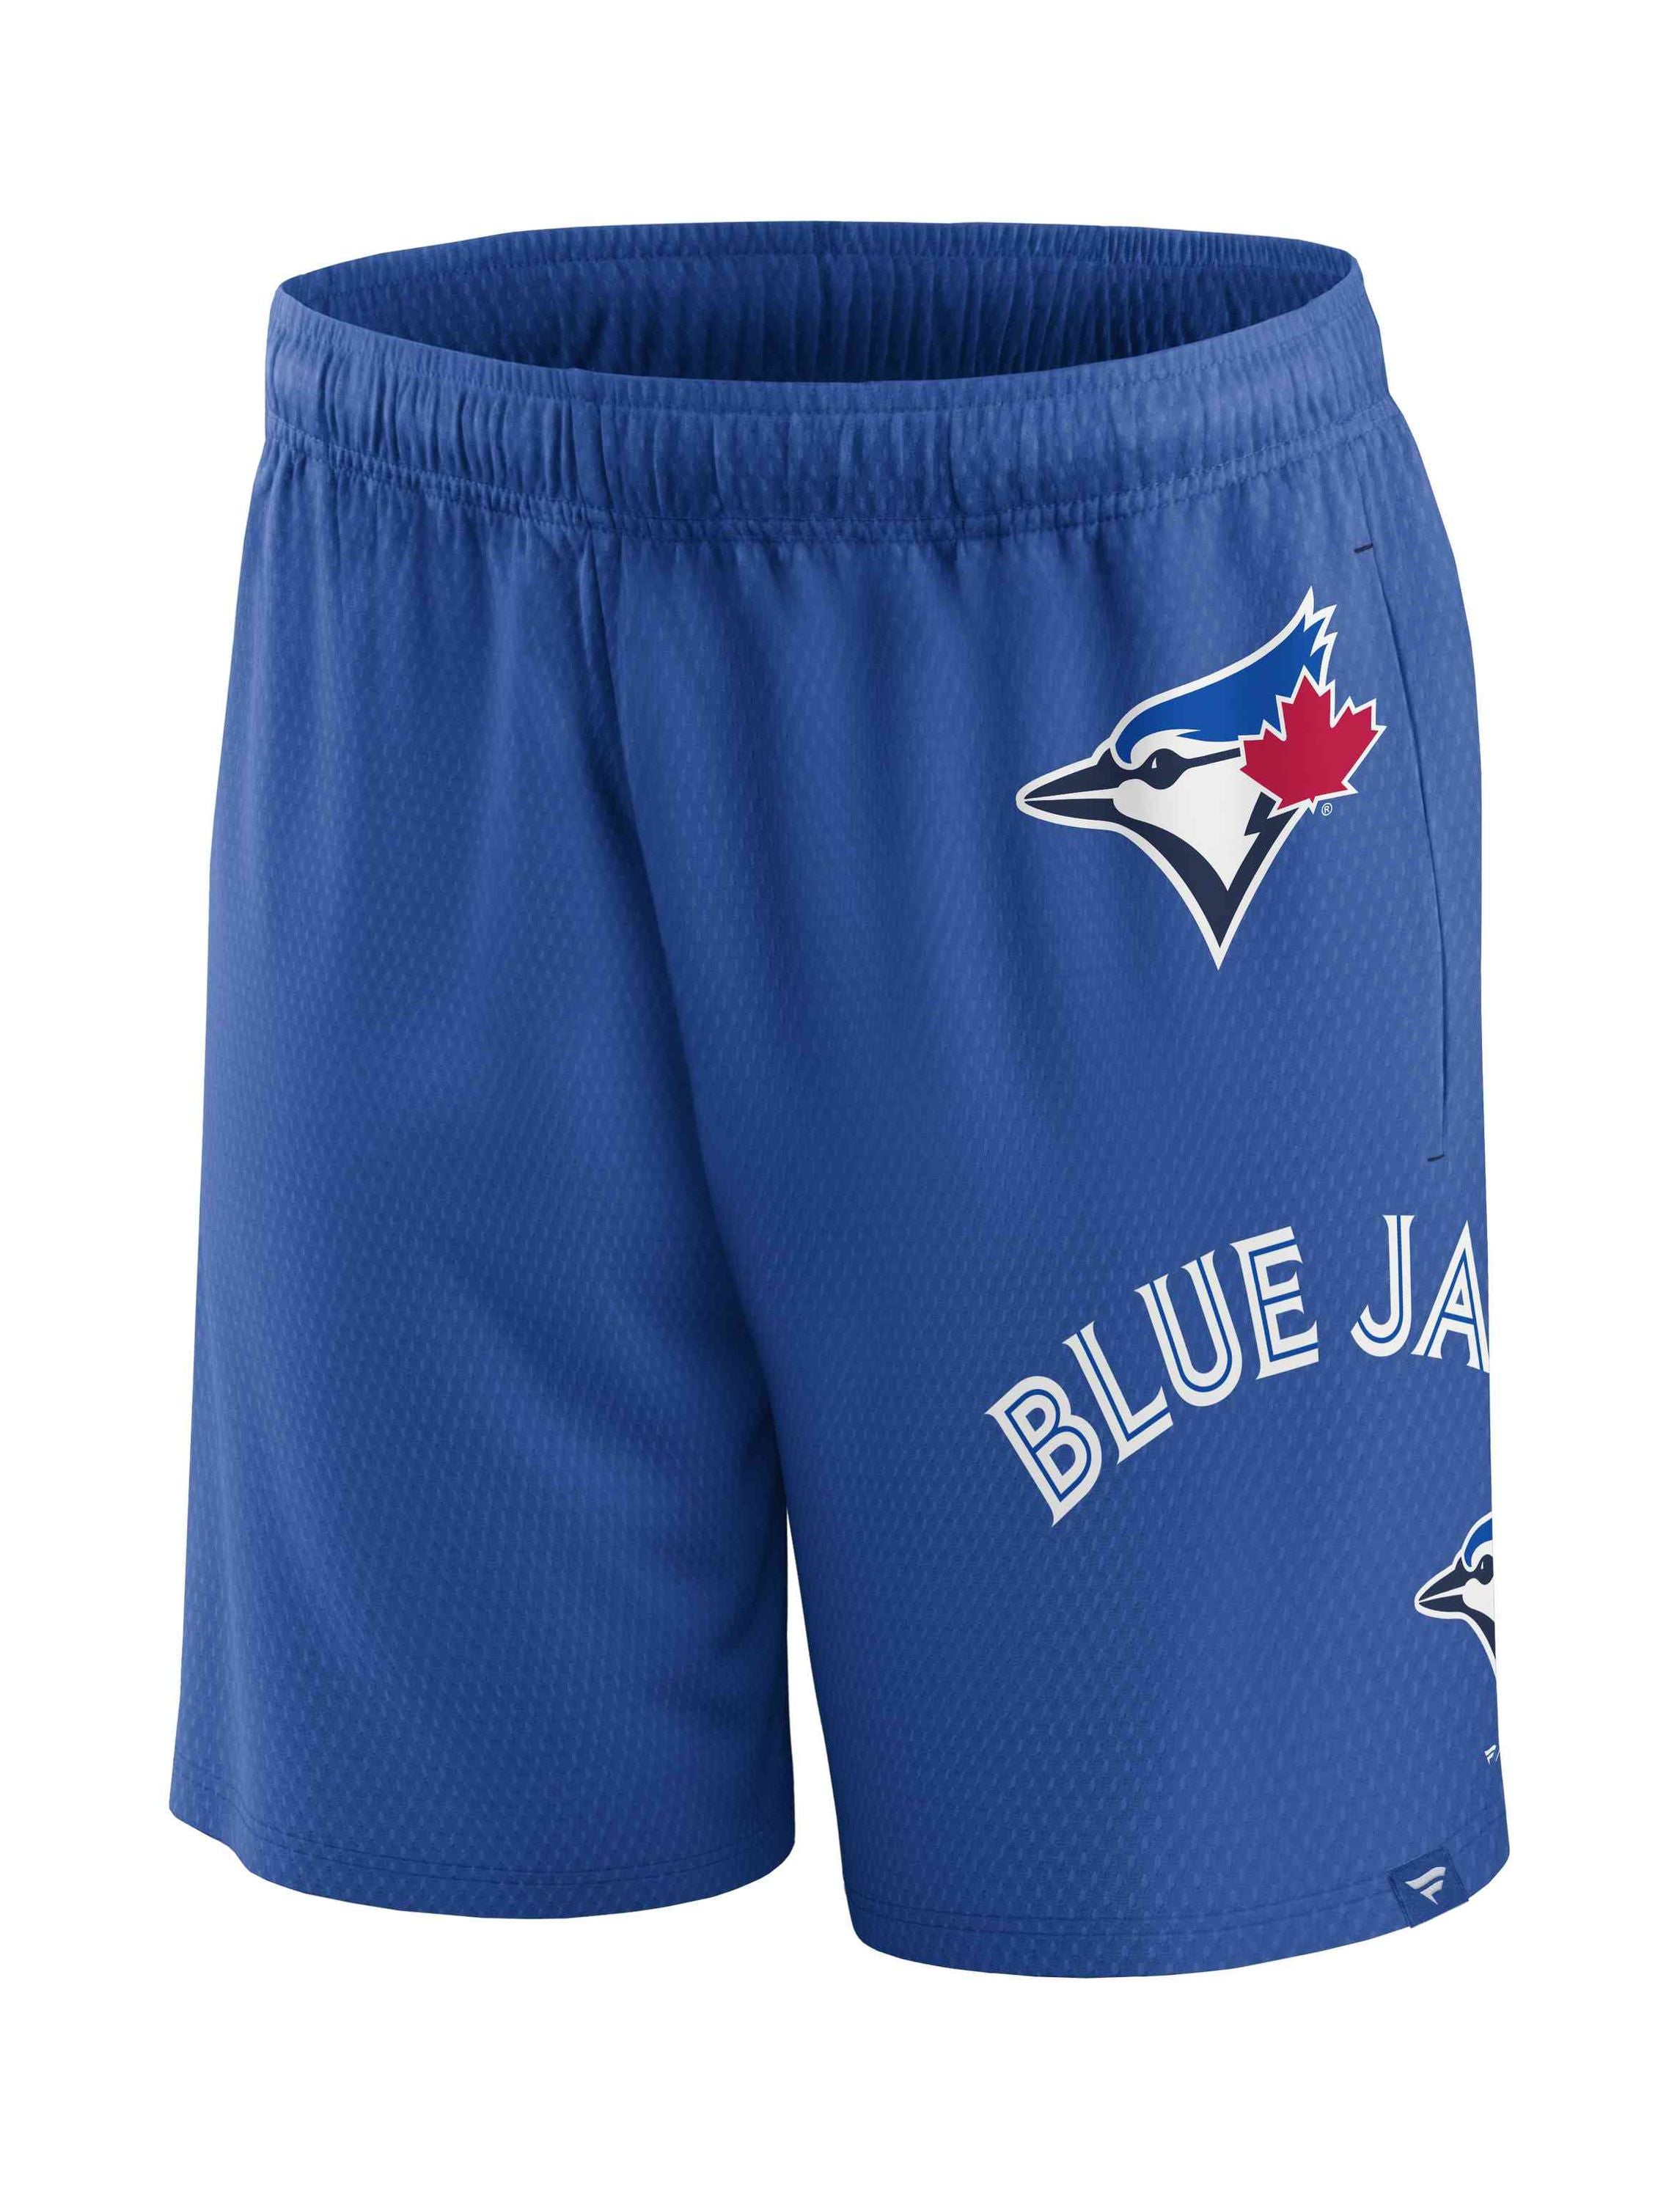 Fanatics - MLB Toronto Blue Jays Mesh Shorts